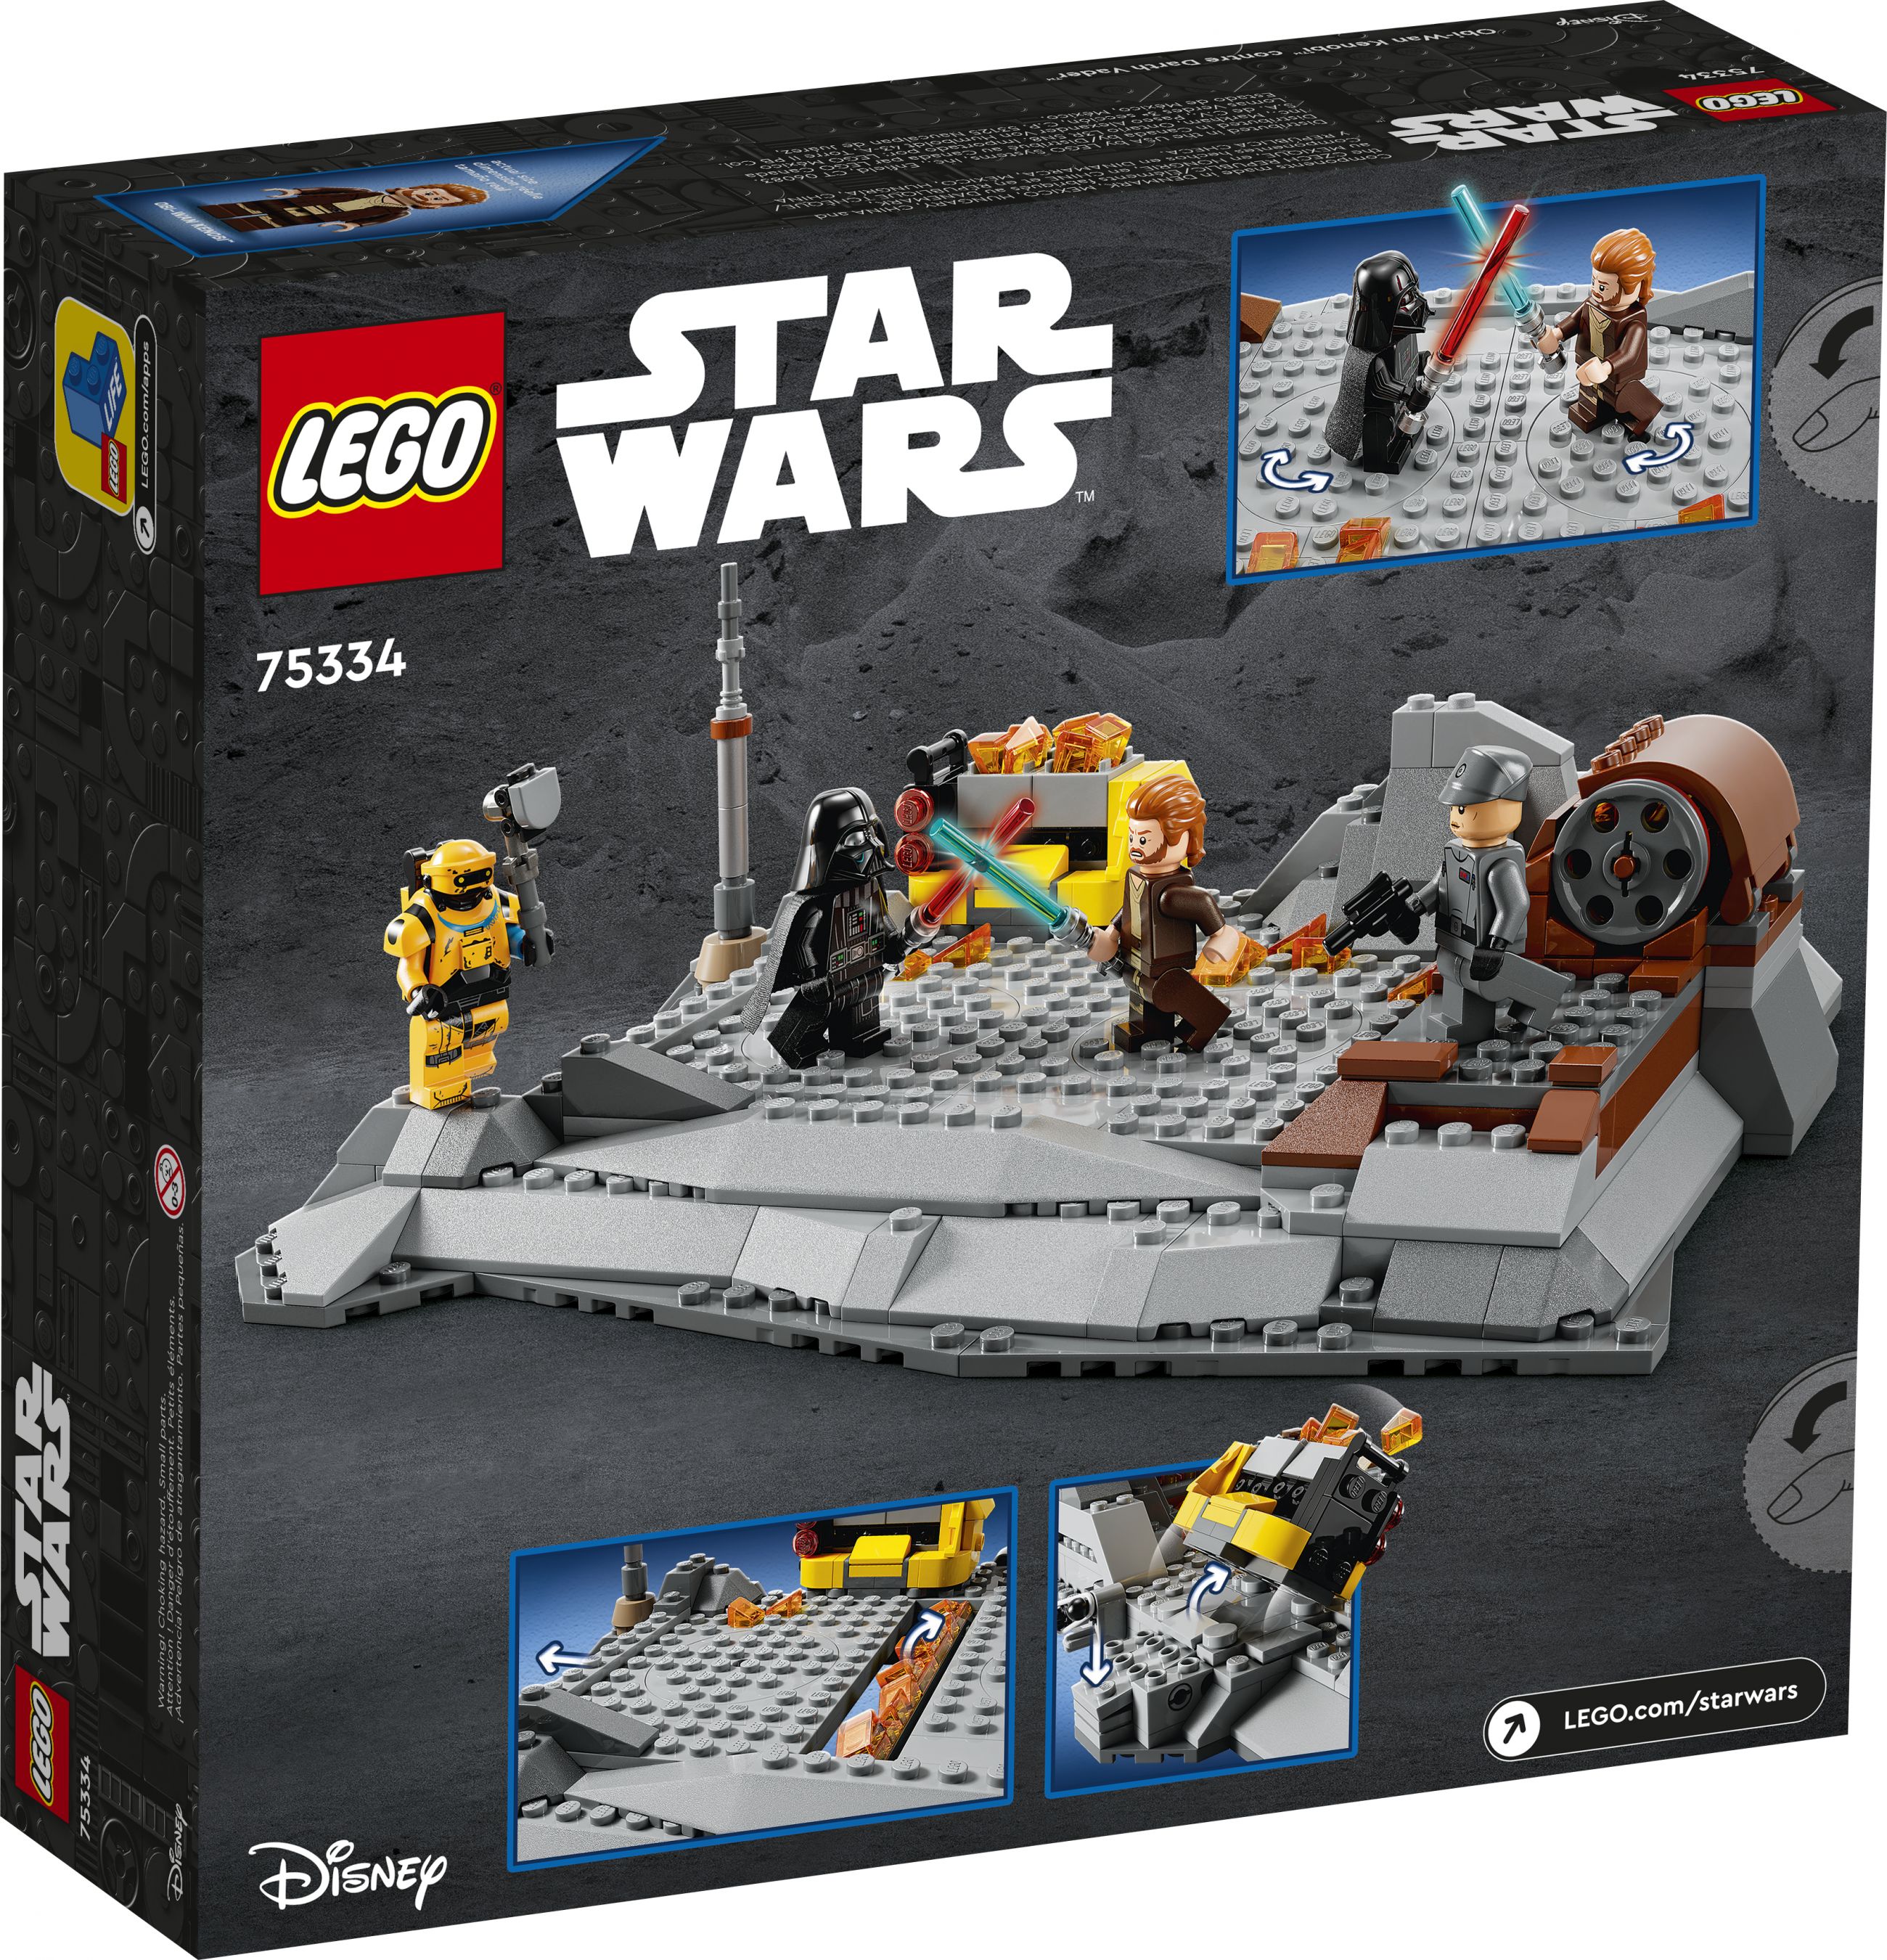 LEGO Star Wars 75334 Obi-Wan Kenobi™ vs. Darth Vader™ LEGO_75334_Box5_v39.jpg